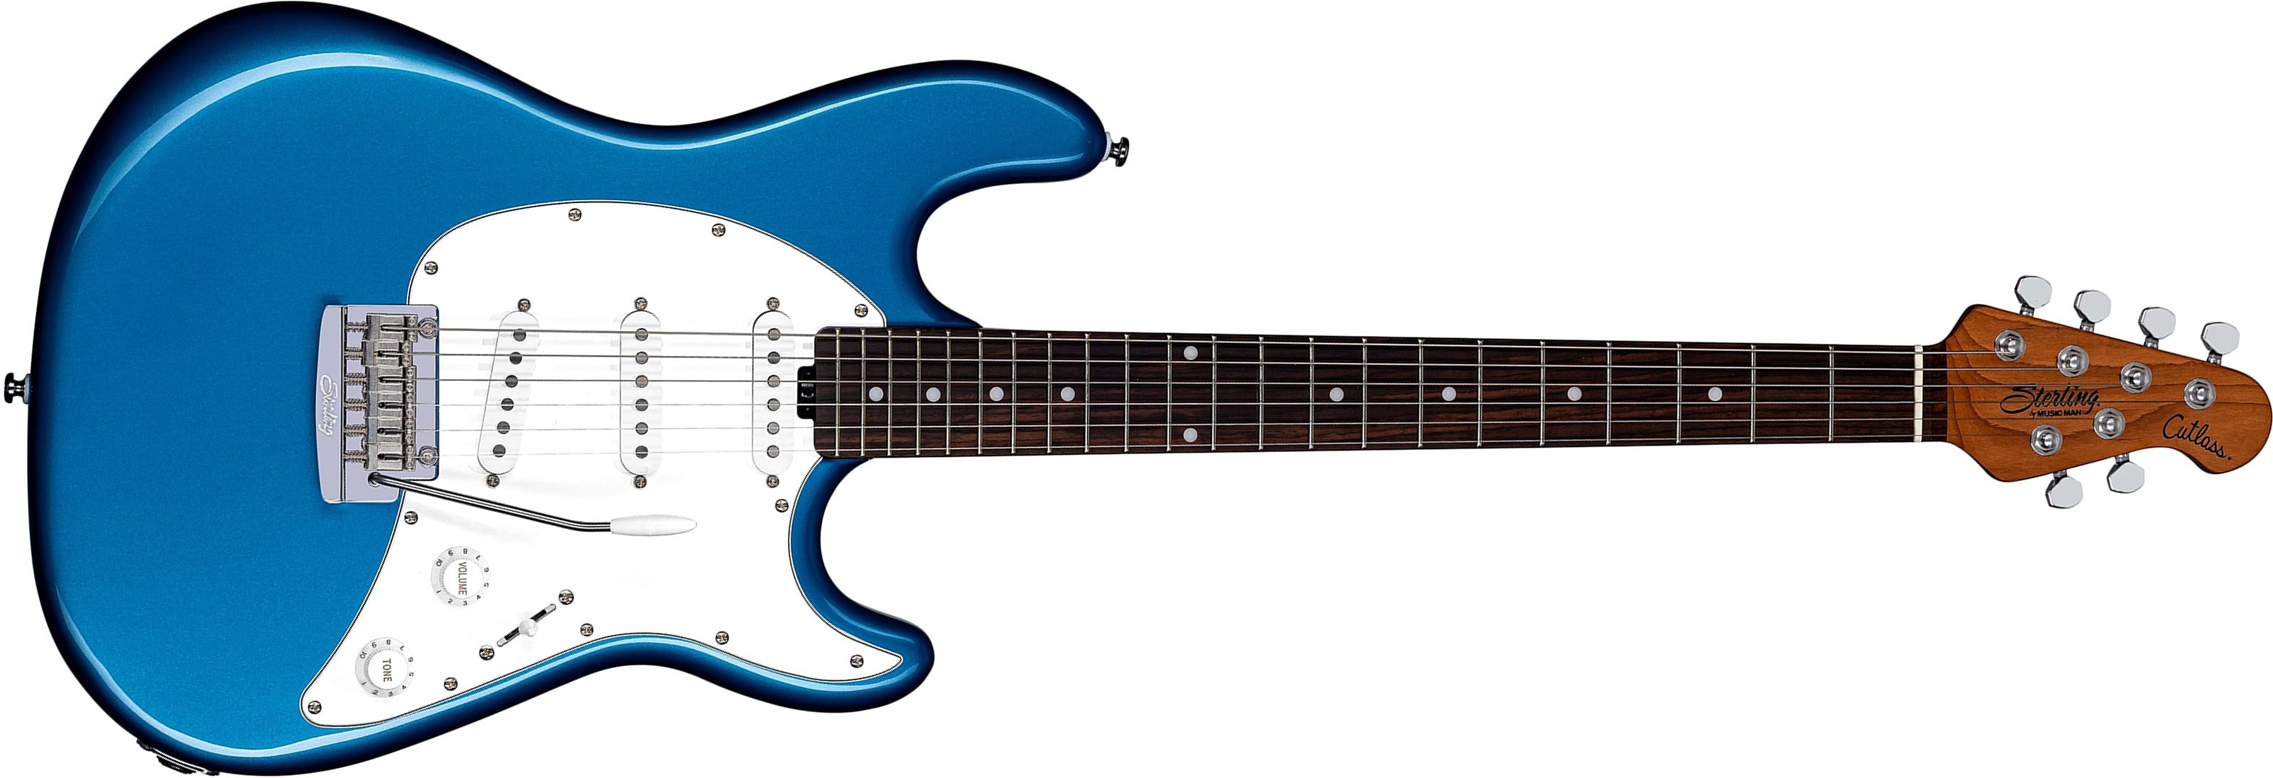 Sterling By Musicman Cutlass Ct50sss 3s Trem Rw - Toluca Lake Blue - Guitarra eléctrica con forma de str. - Main picture